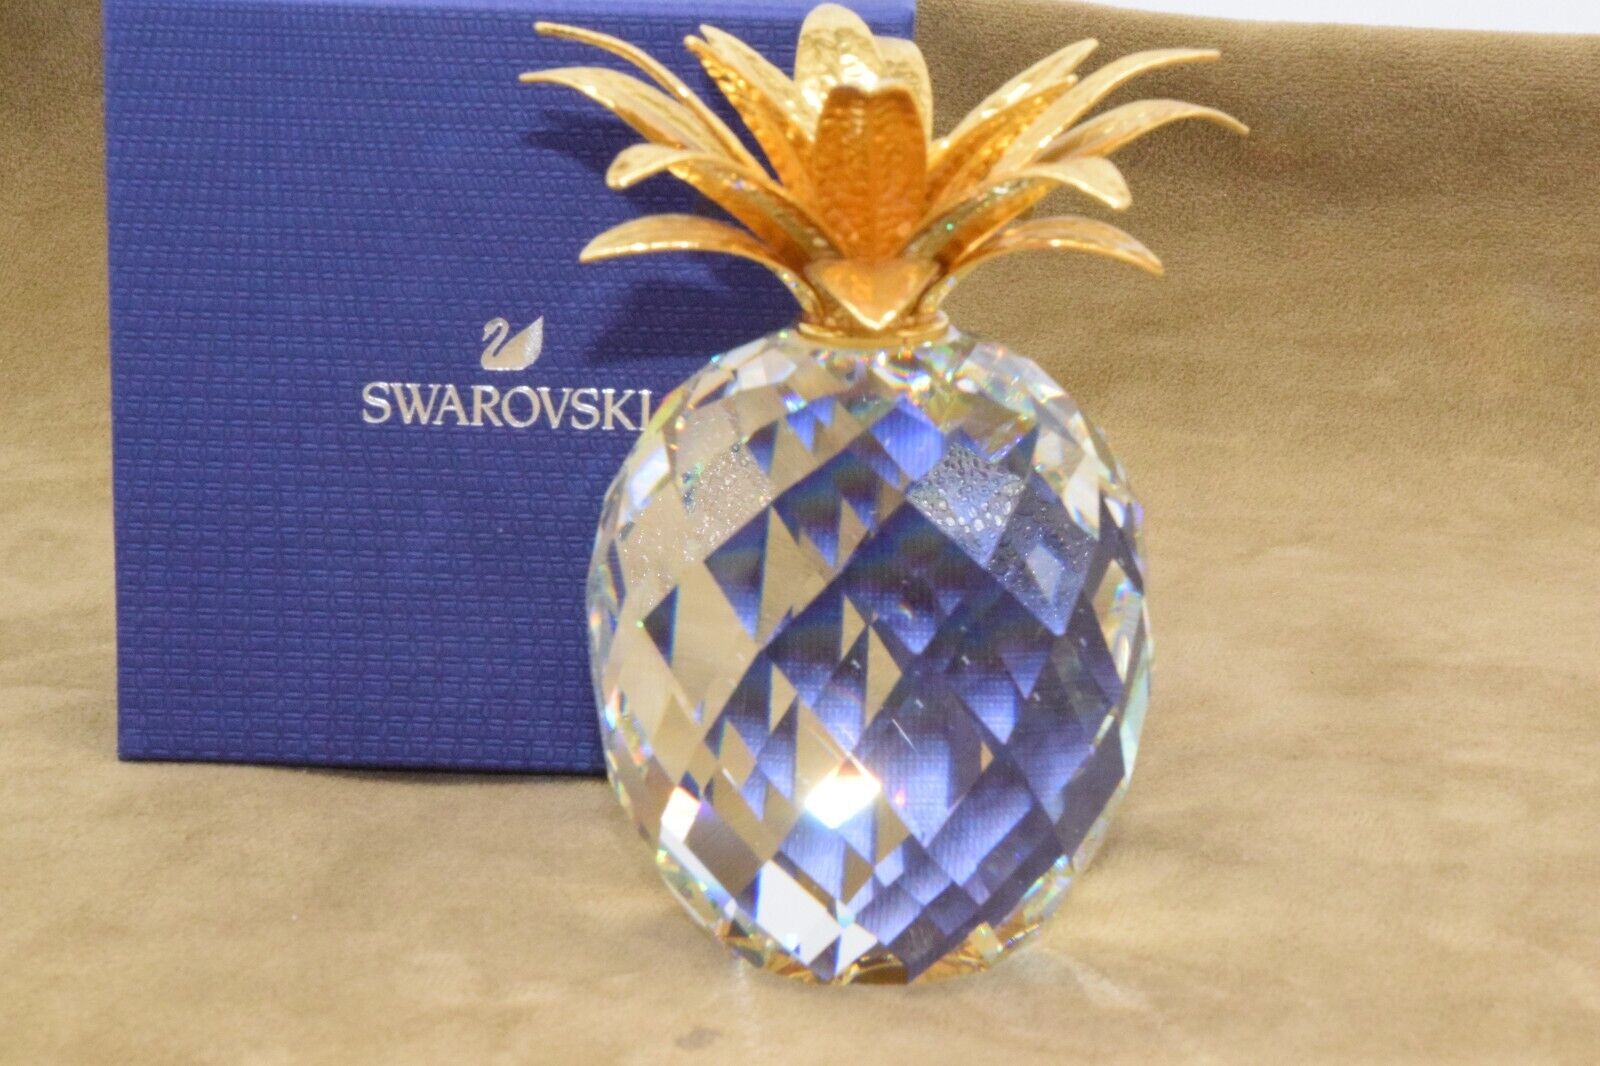 NEW Swarovski Crystal PINEAPPLE LARGE Figurine #10044 Hammered Gold Leaves